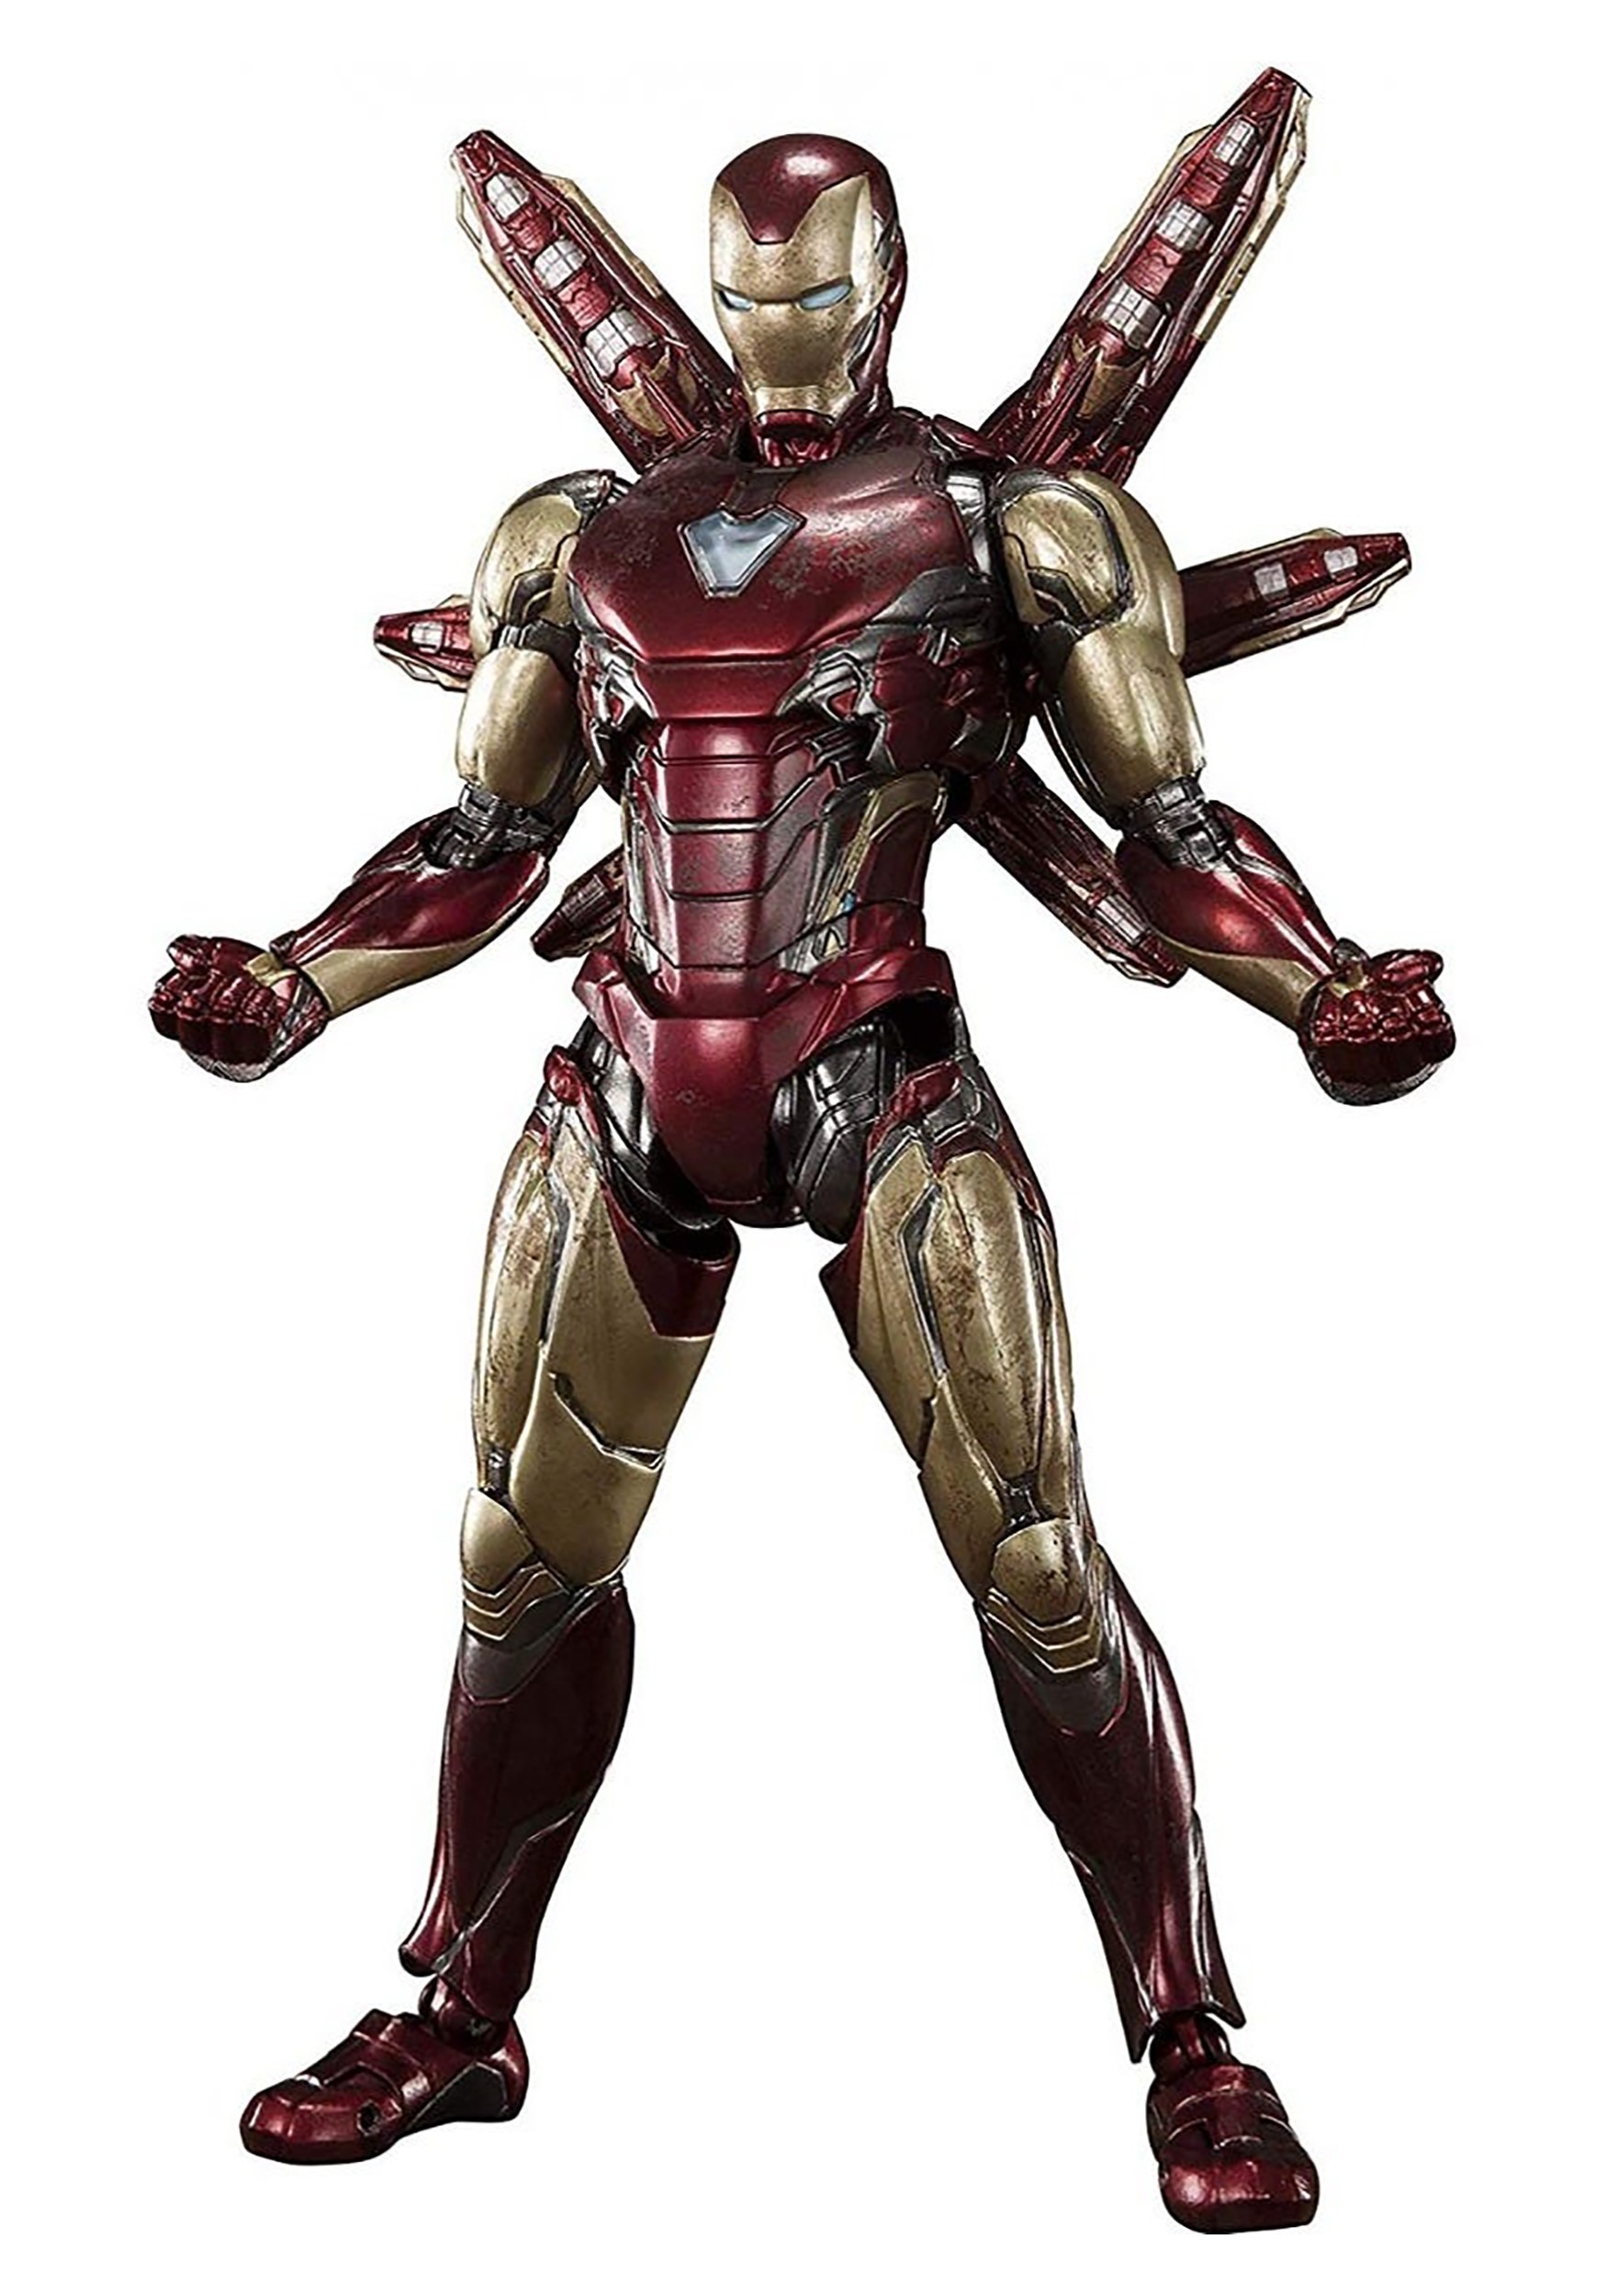 Avengers: End Game Iron Man Mark 85 Final Battle Edition